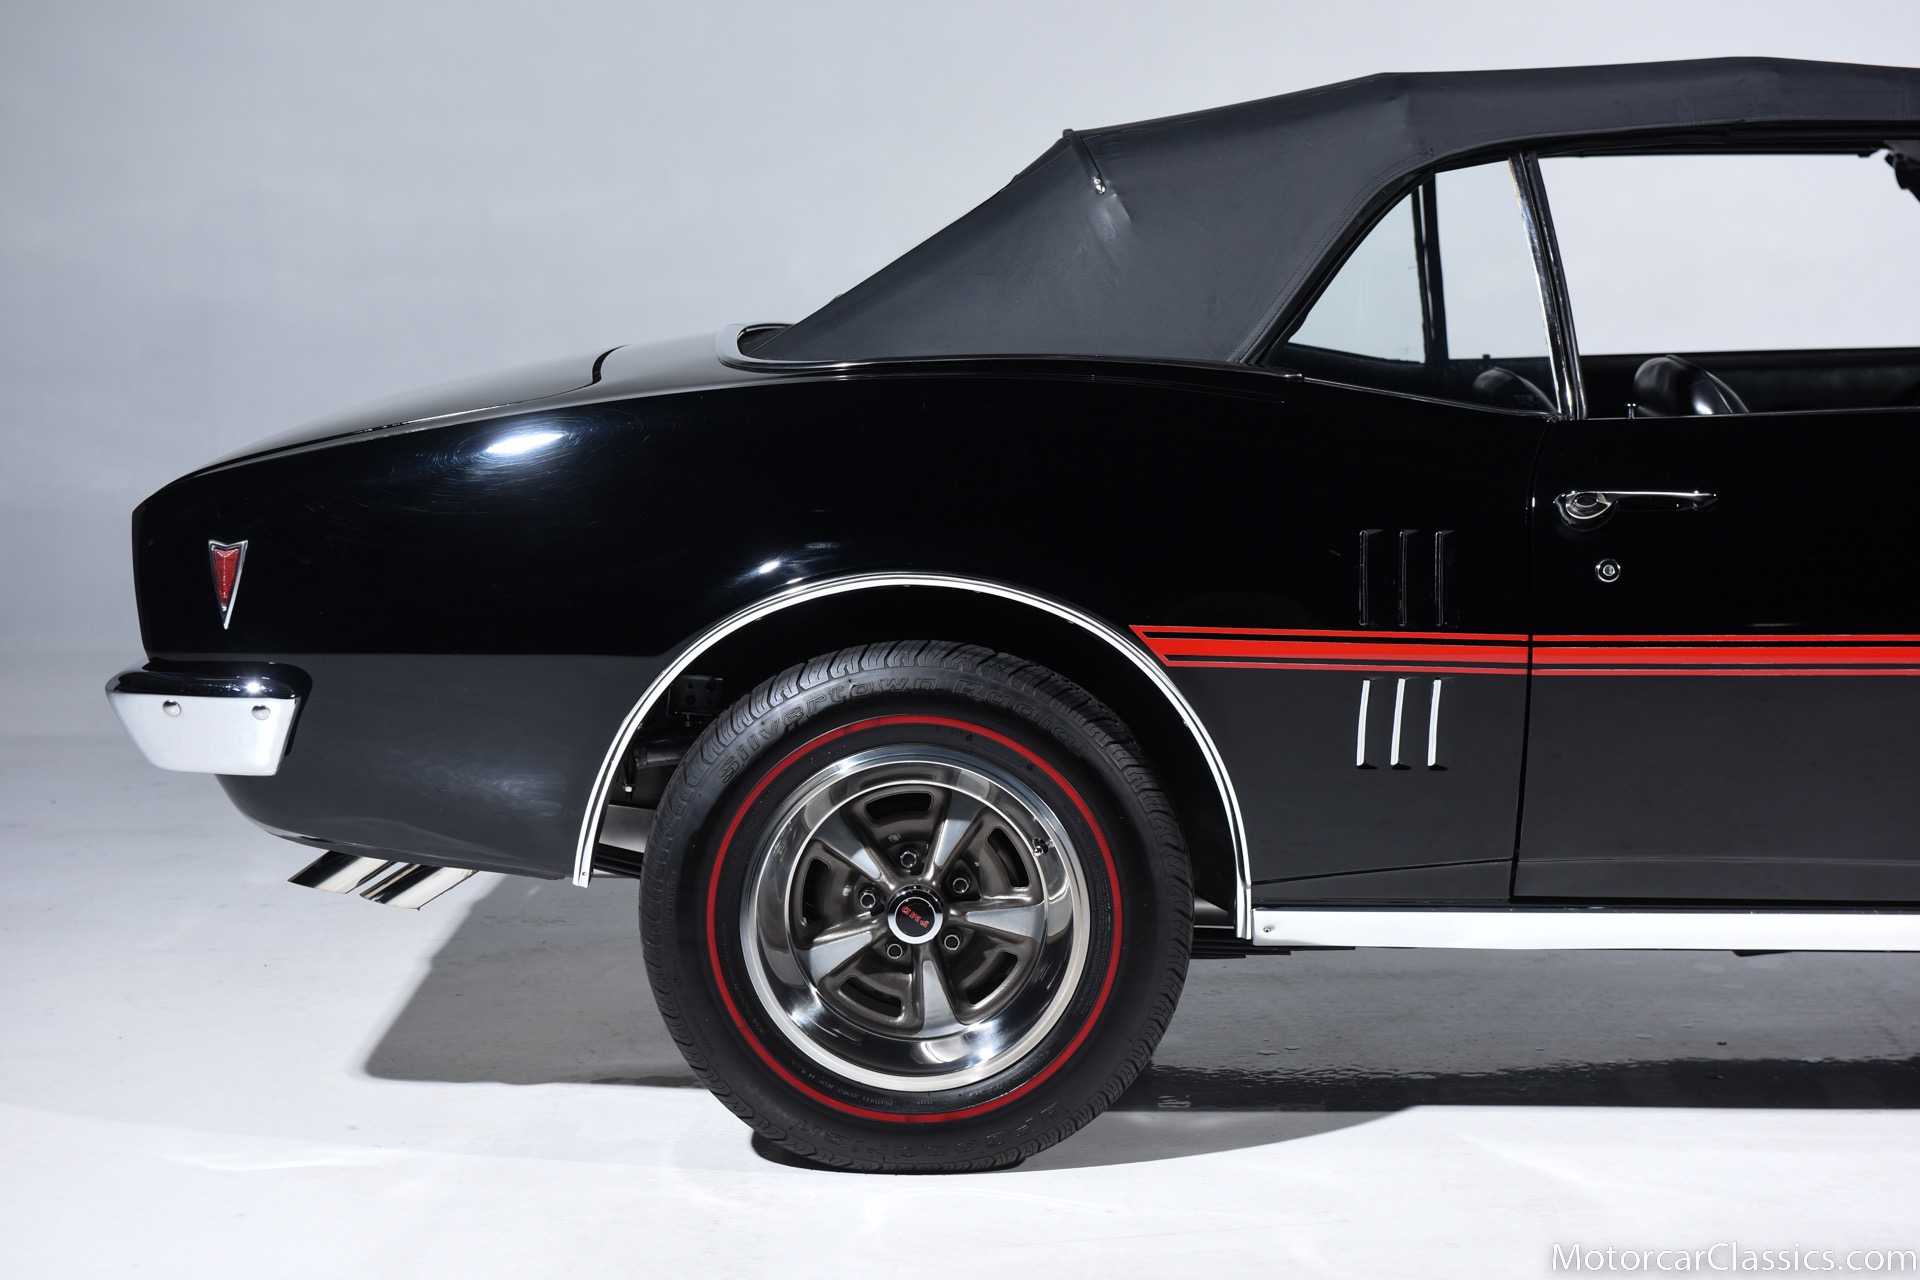 1968 Pontiac Firebird 